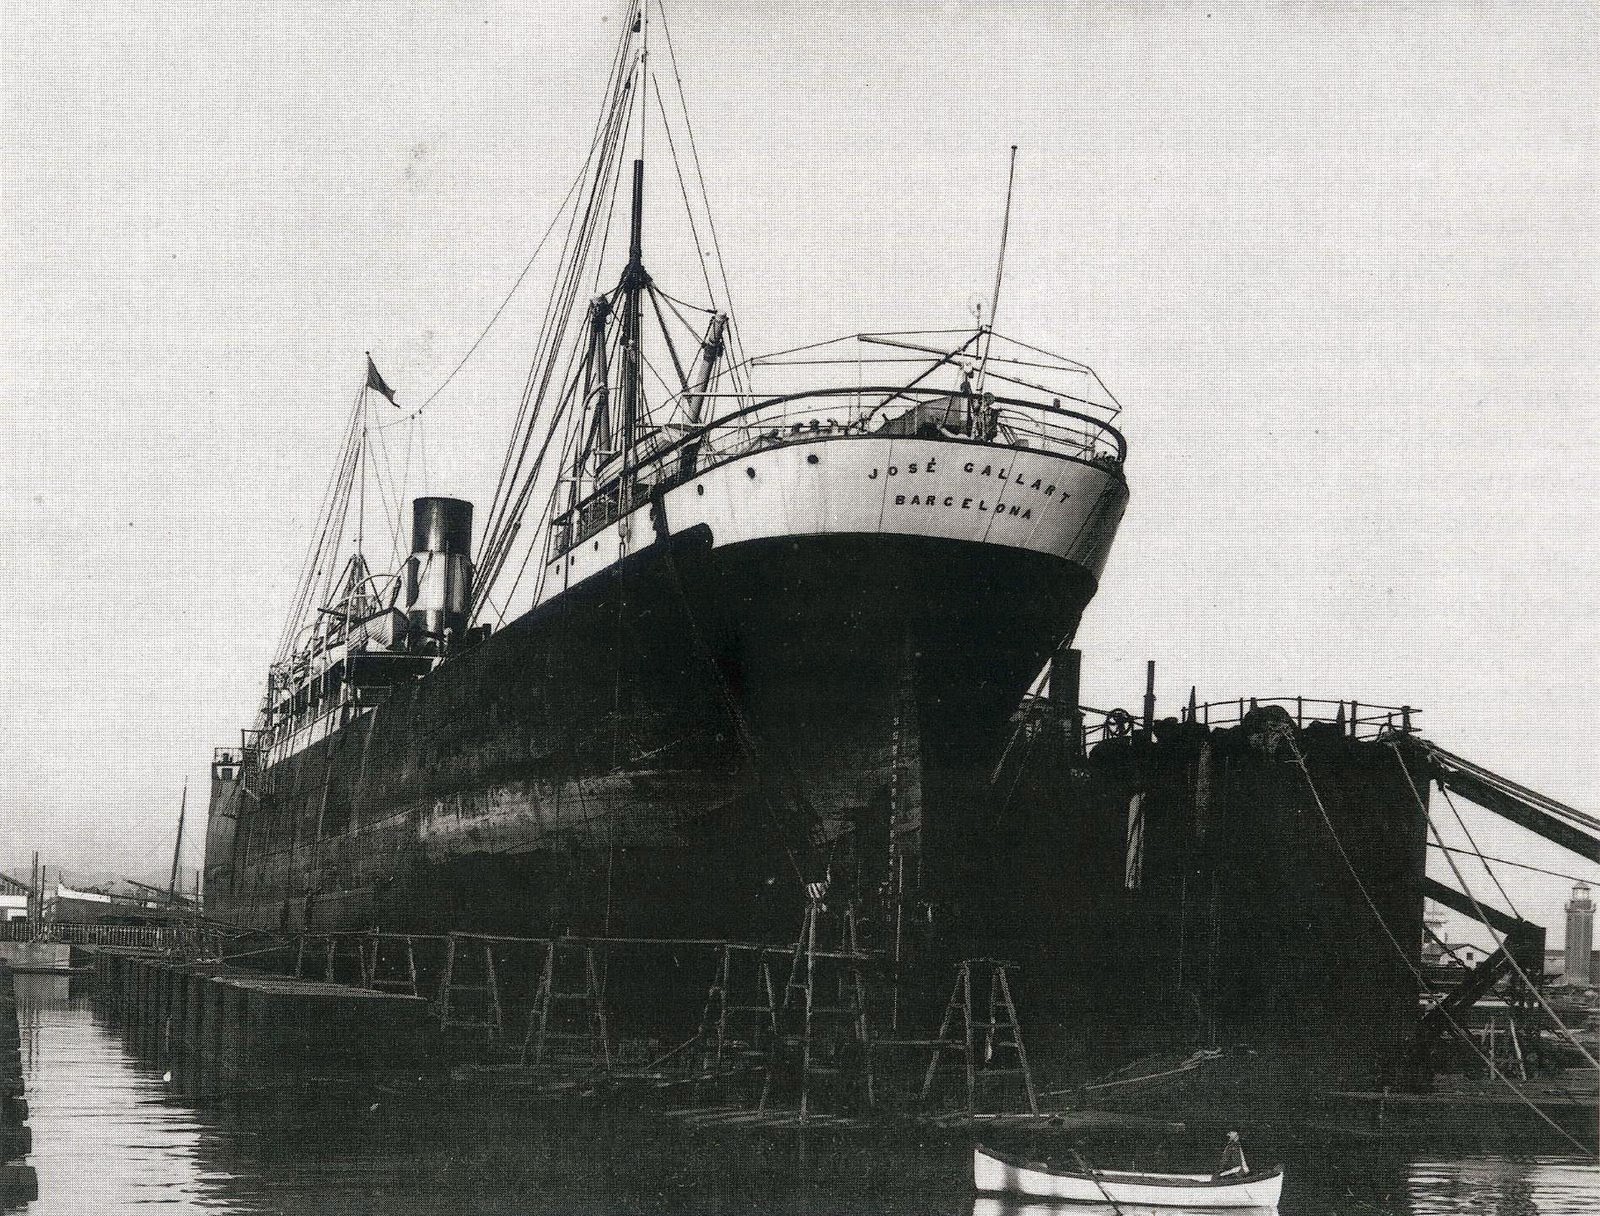 French steamship Jose Gallart circa 1898